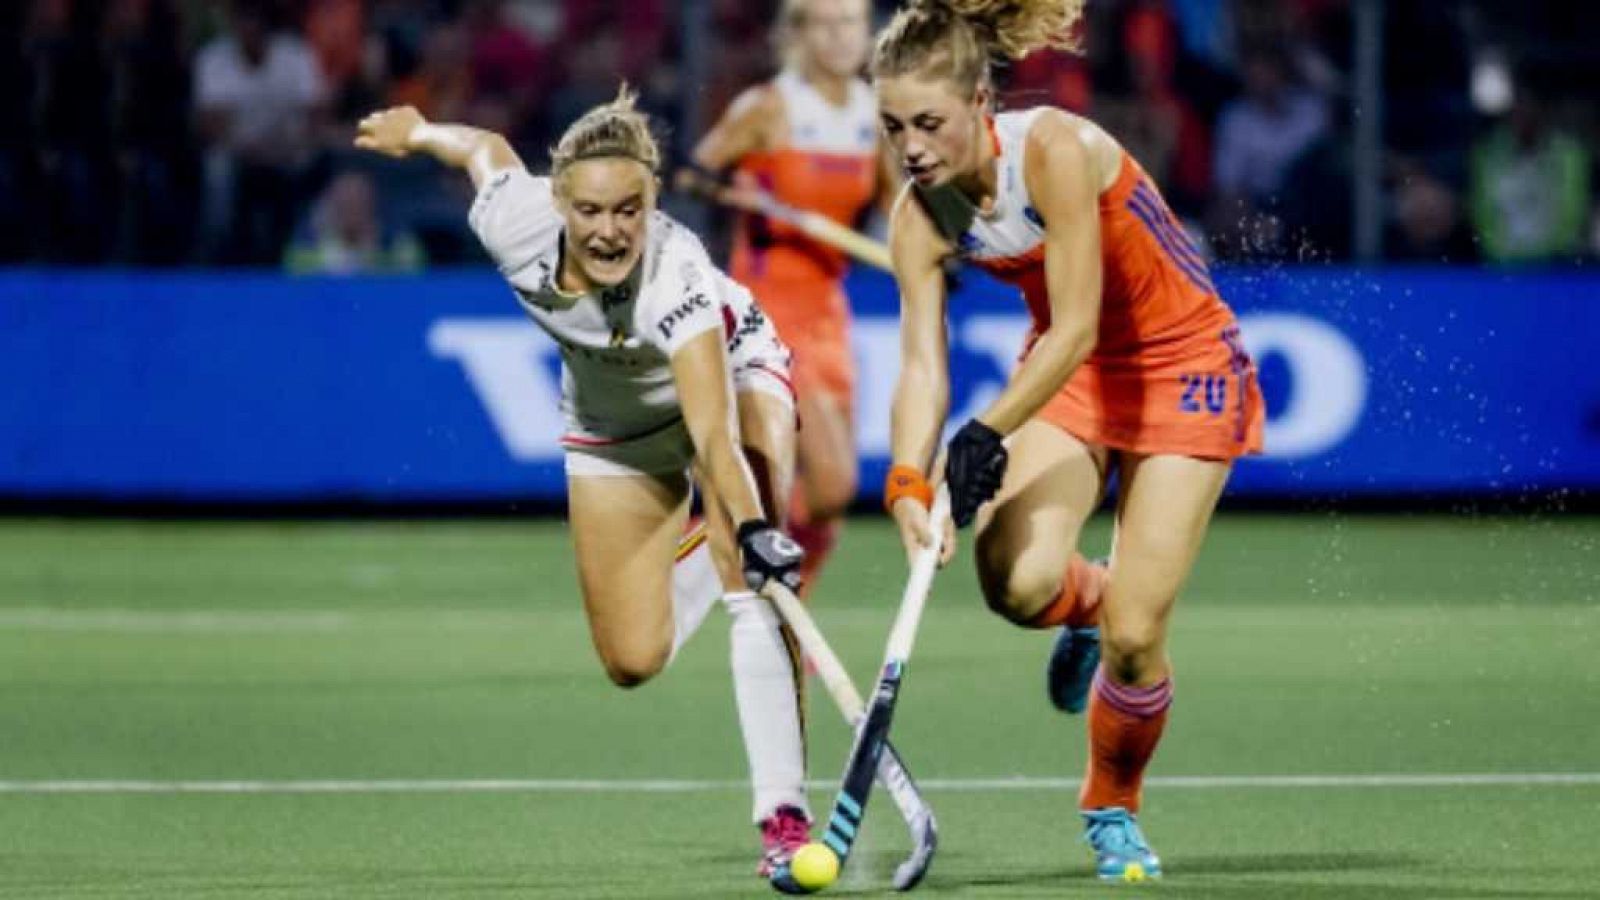 Hockey Hierba - Campeonato de Europa Femenino. Final: Bélgica - Holanda